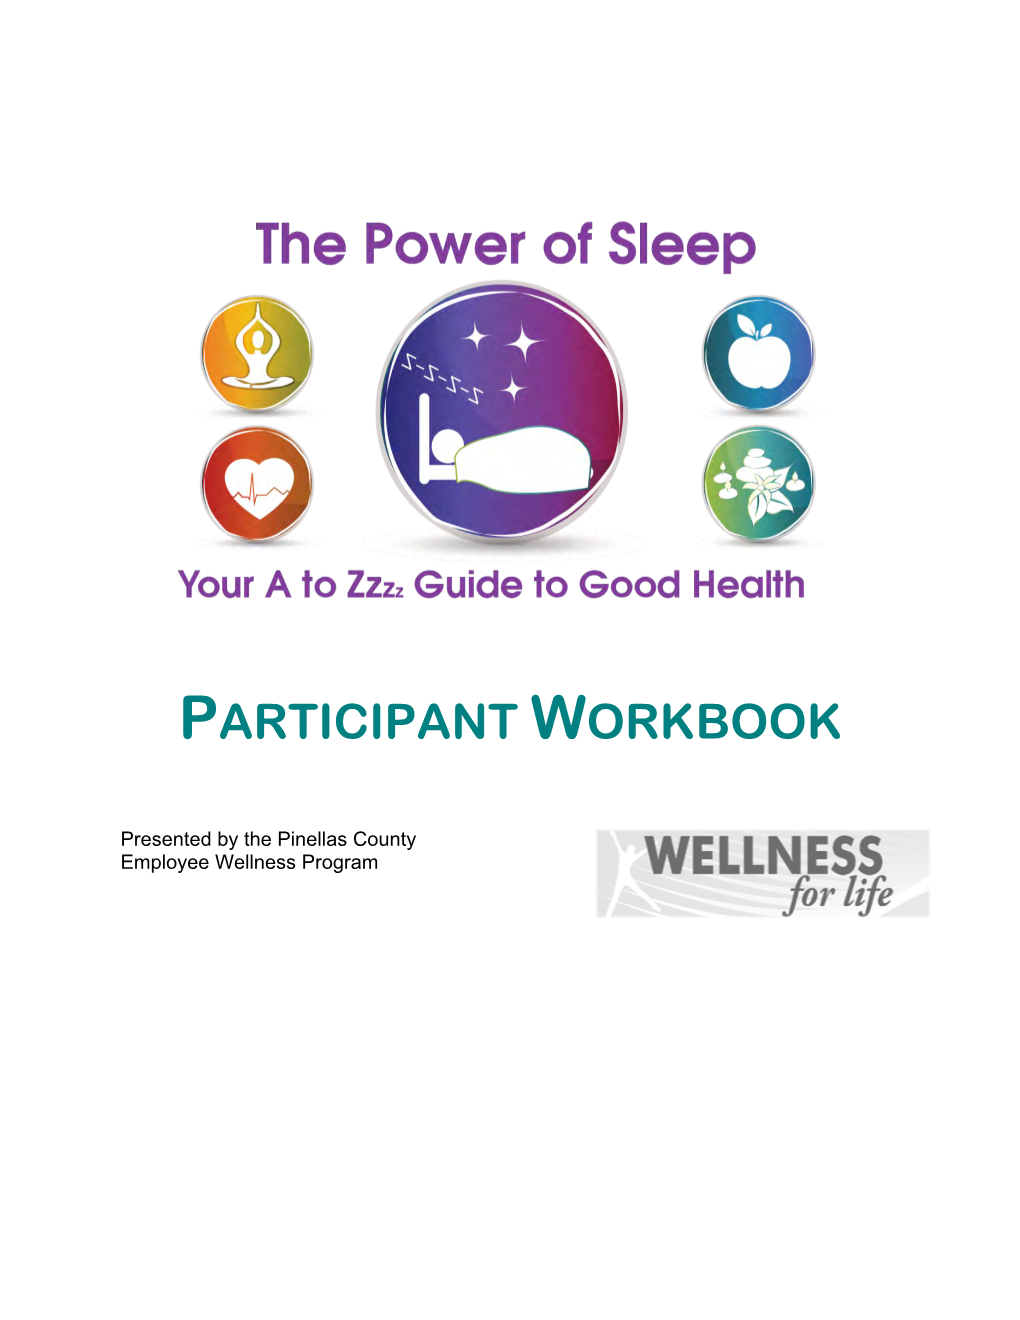 The Power of Sleep Workbook